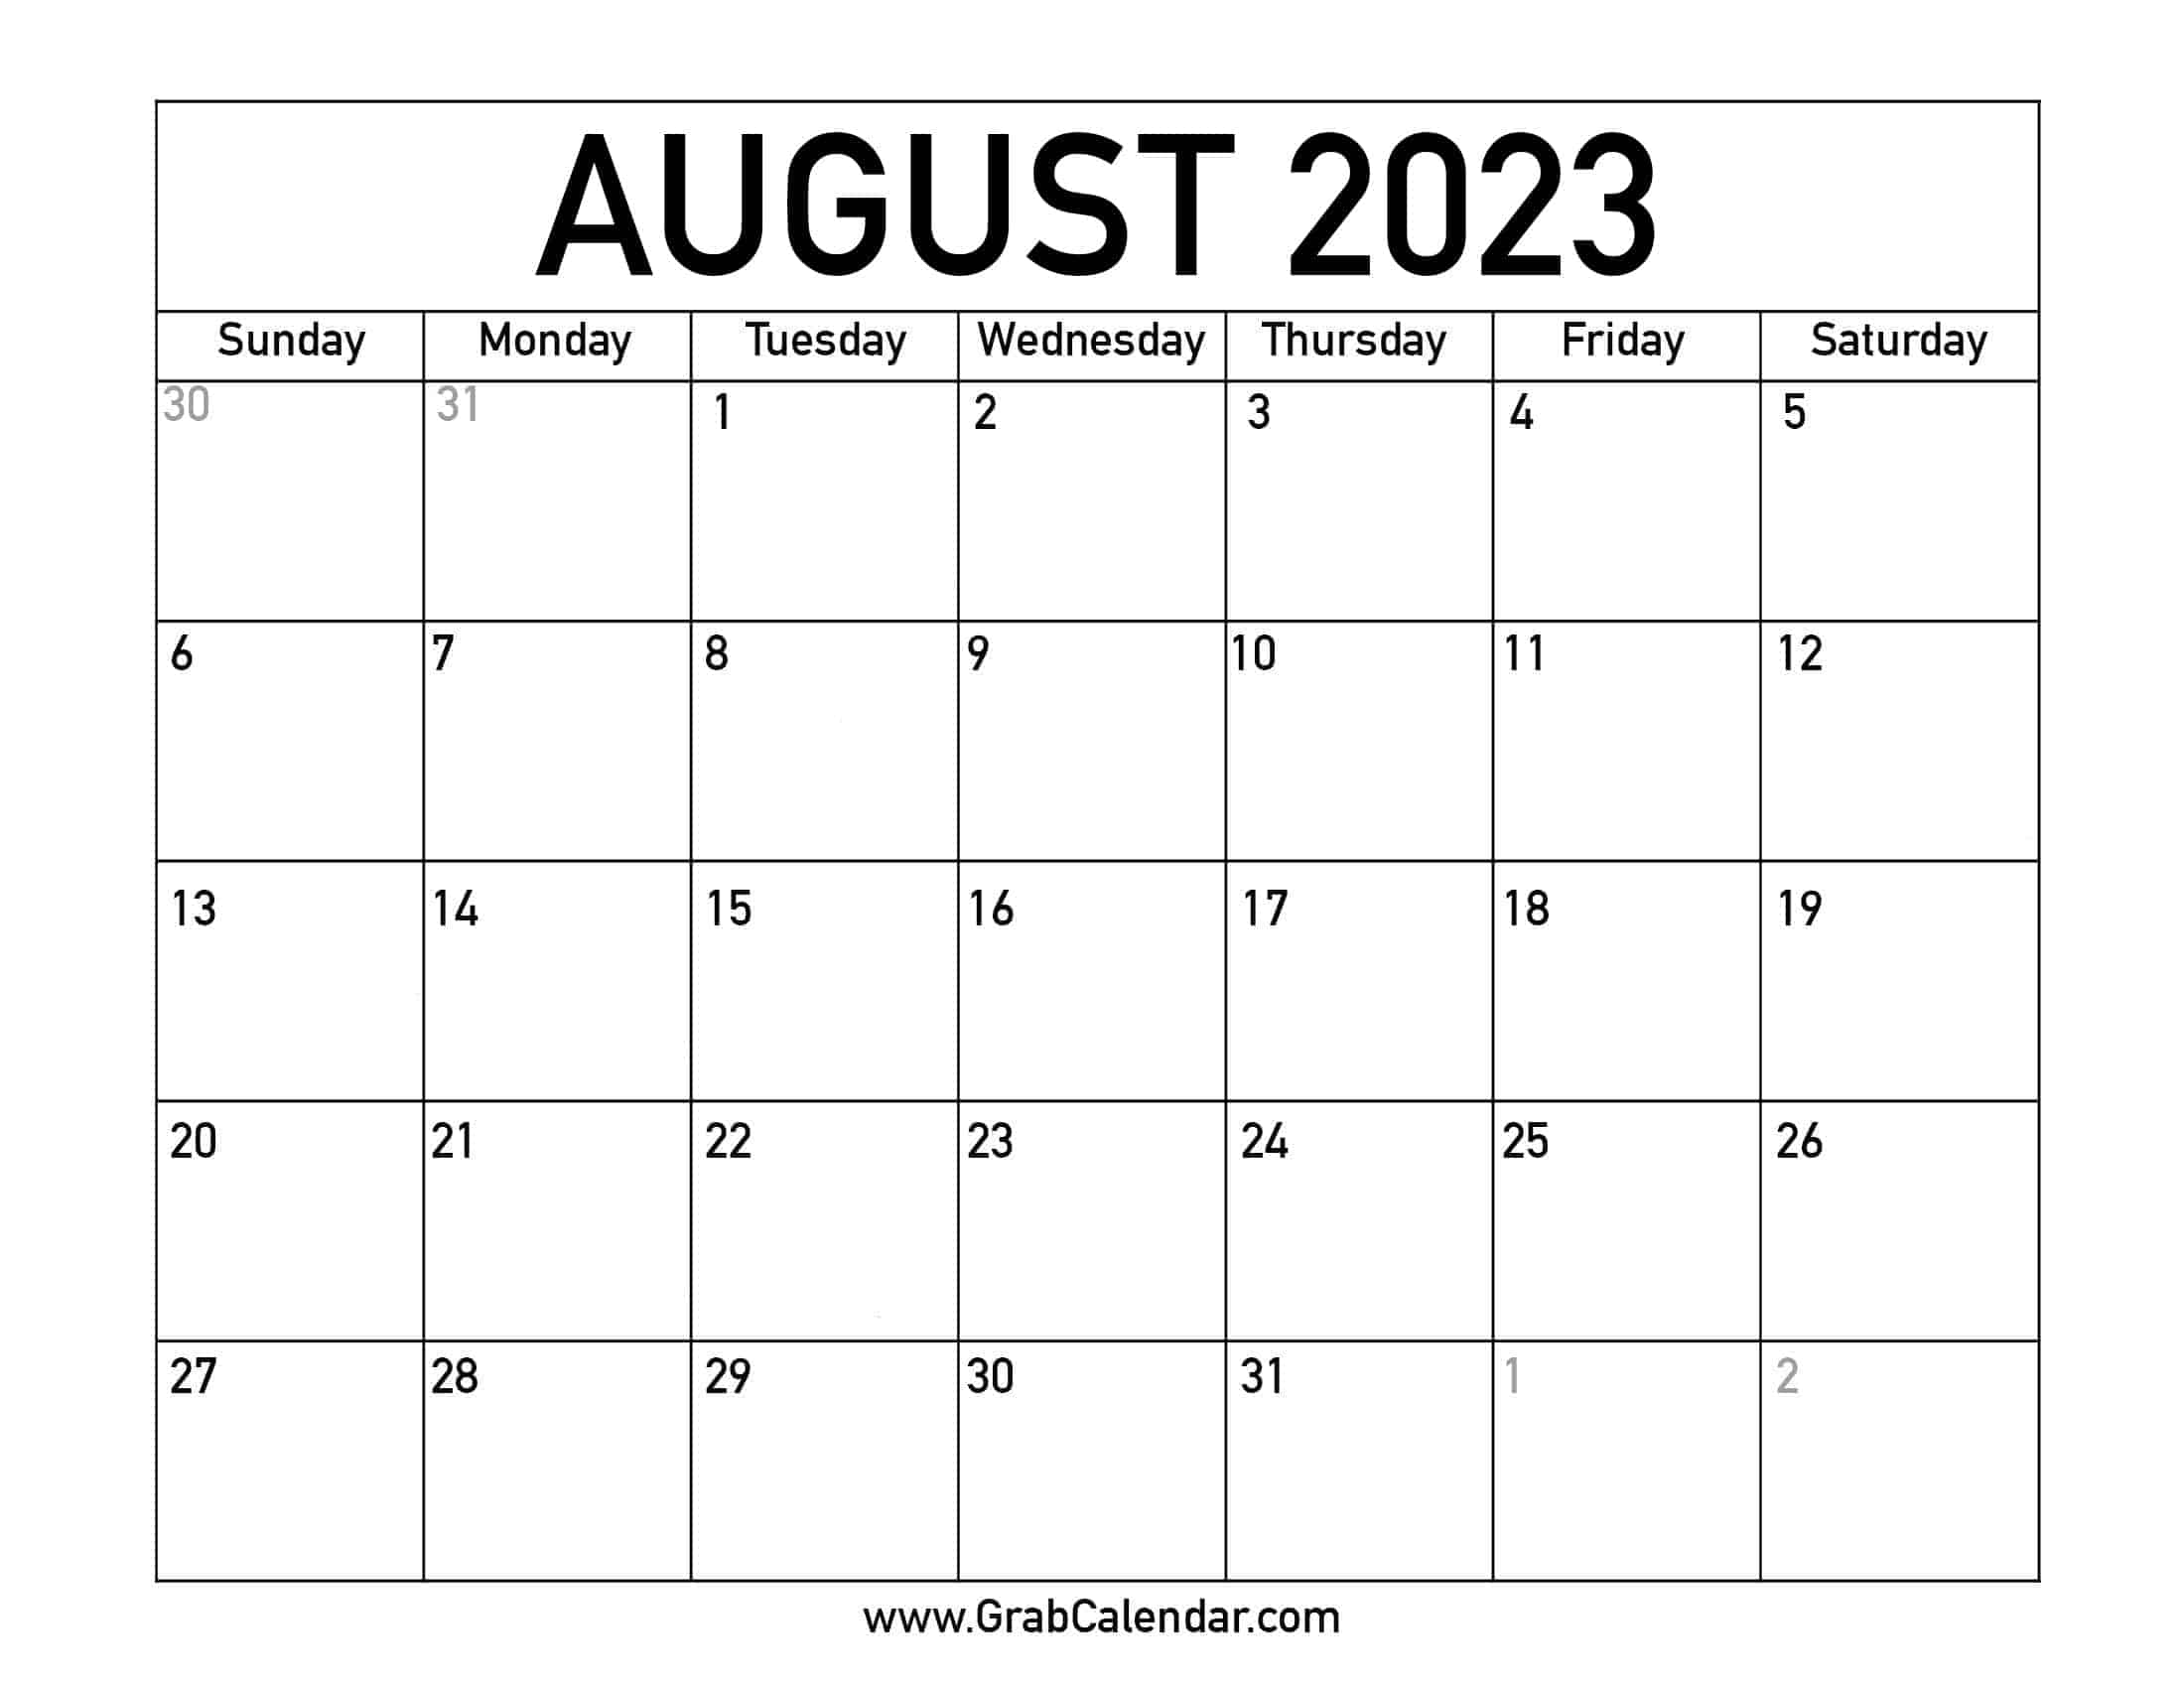 August 2023 Calendar wih Holidays